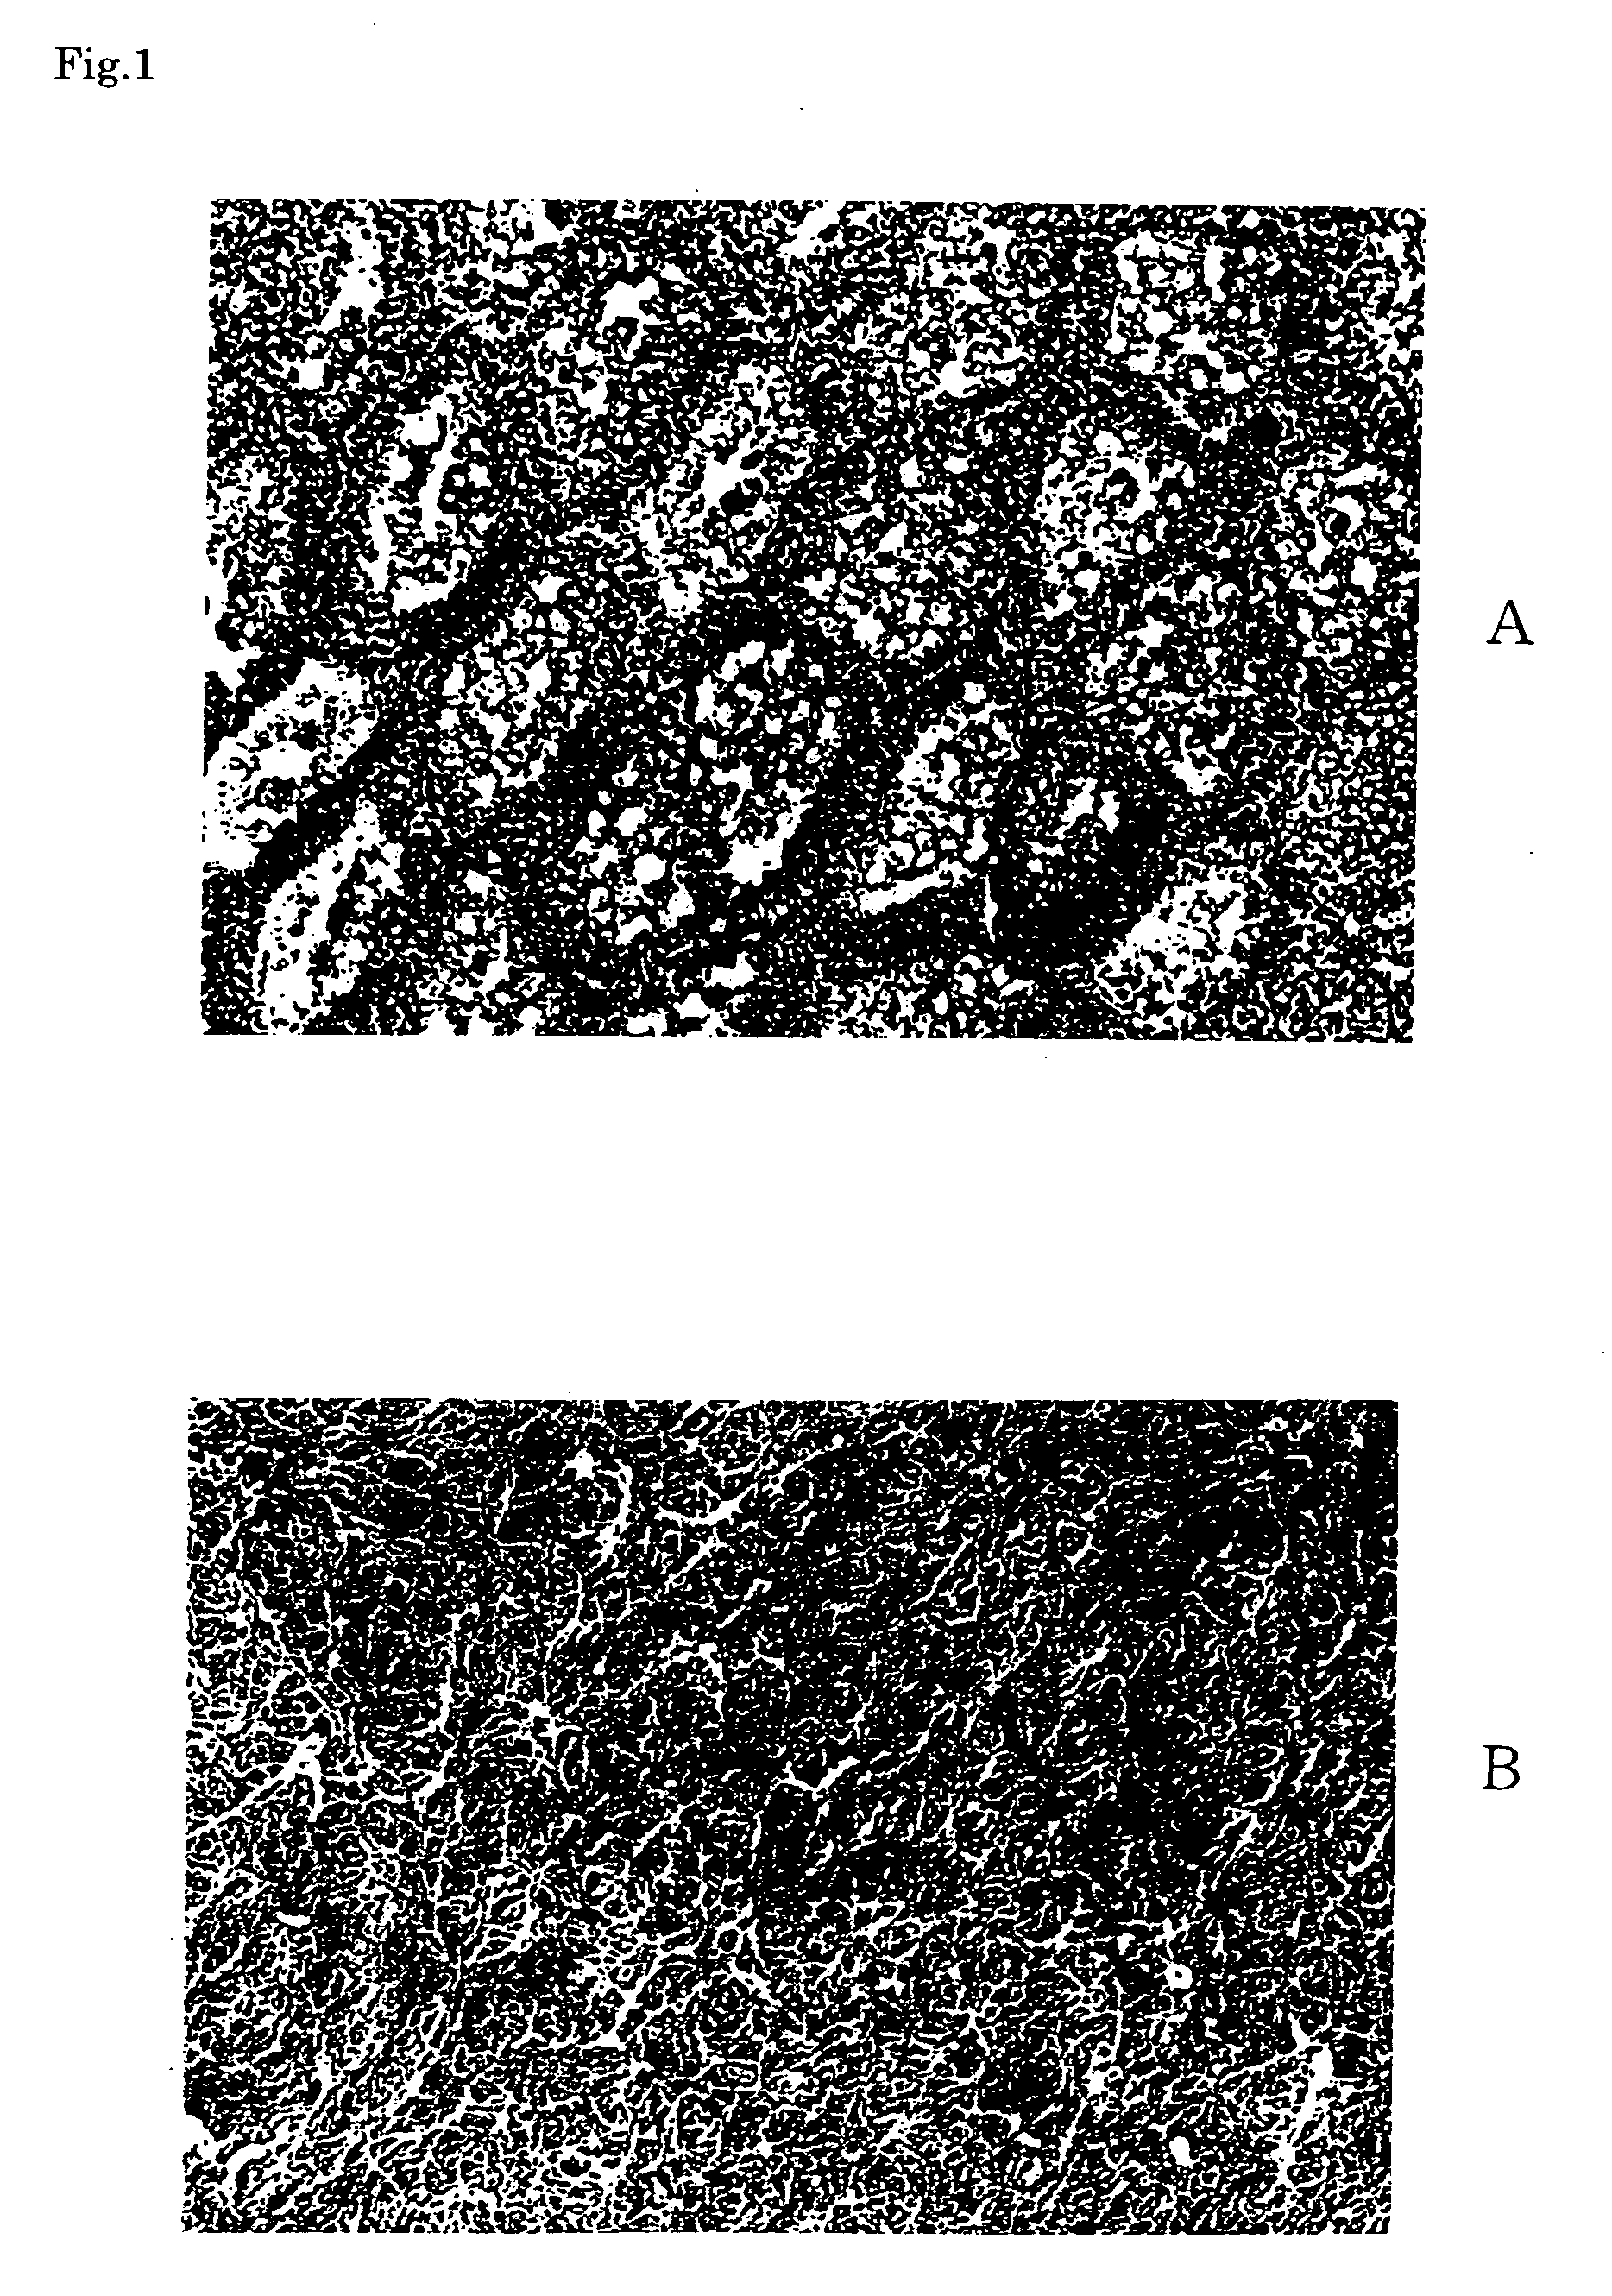 Ectocornea-like sheet and method of constructing the same